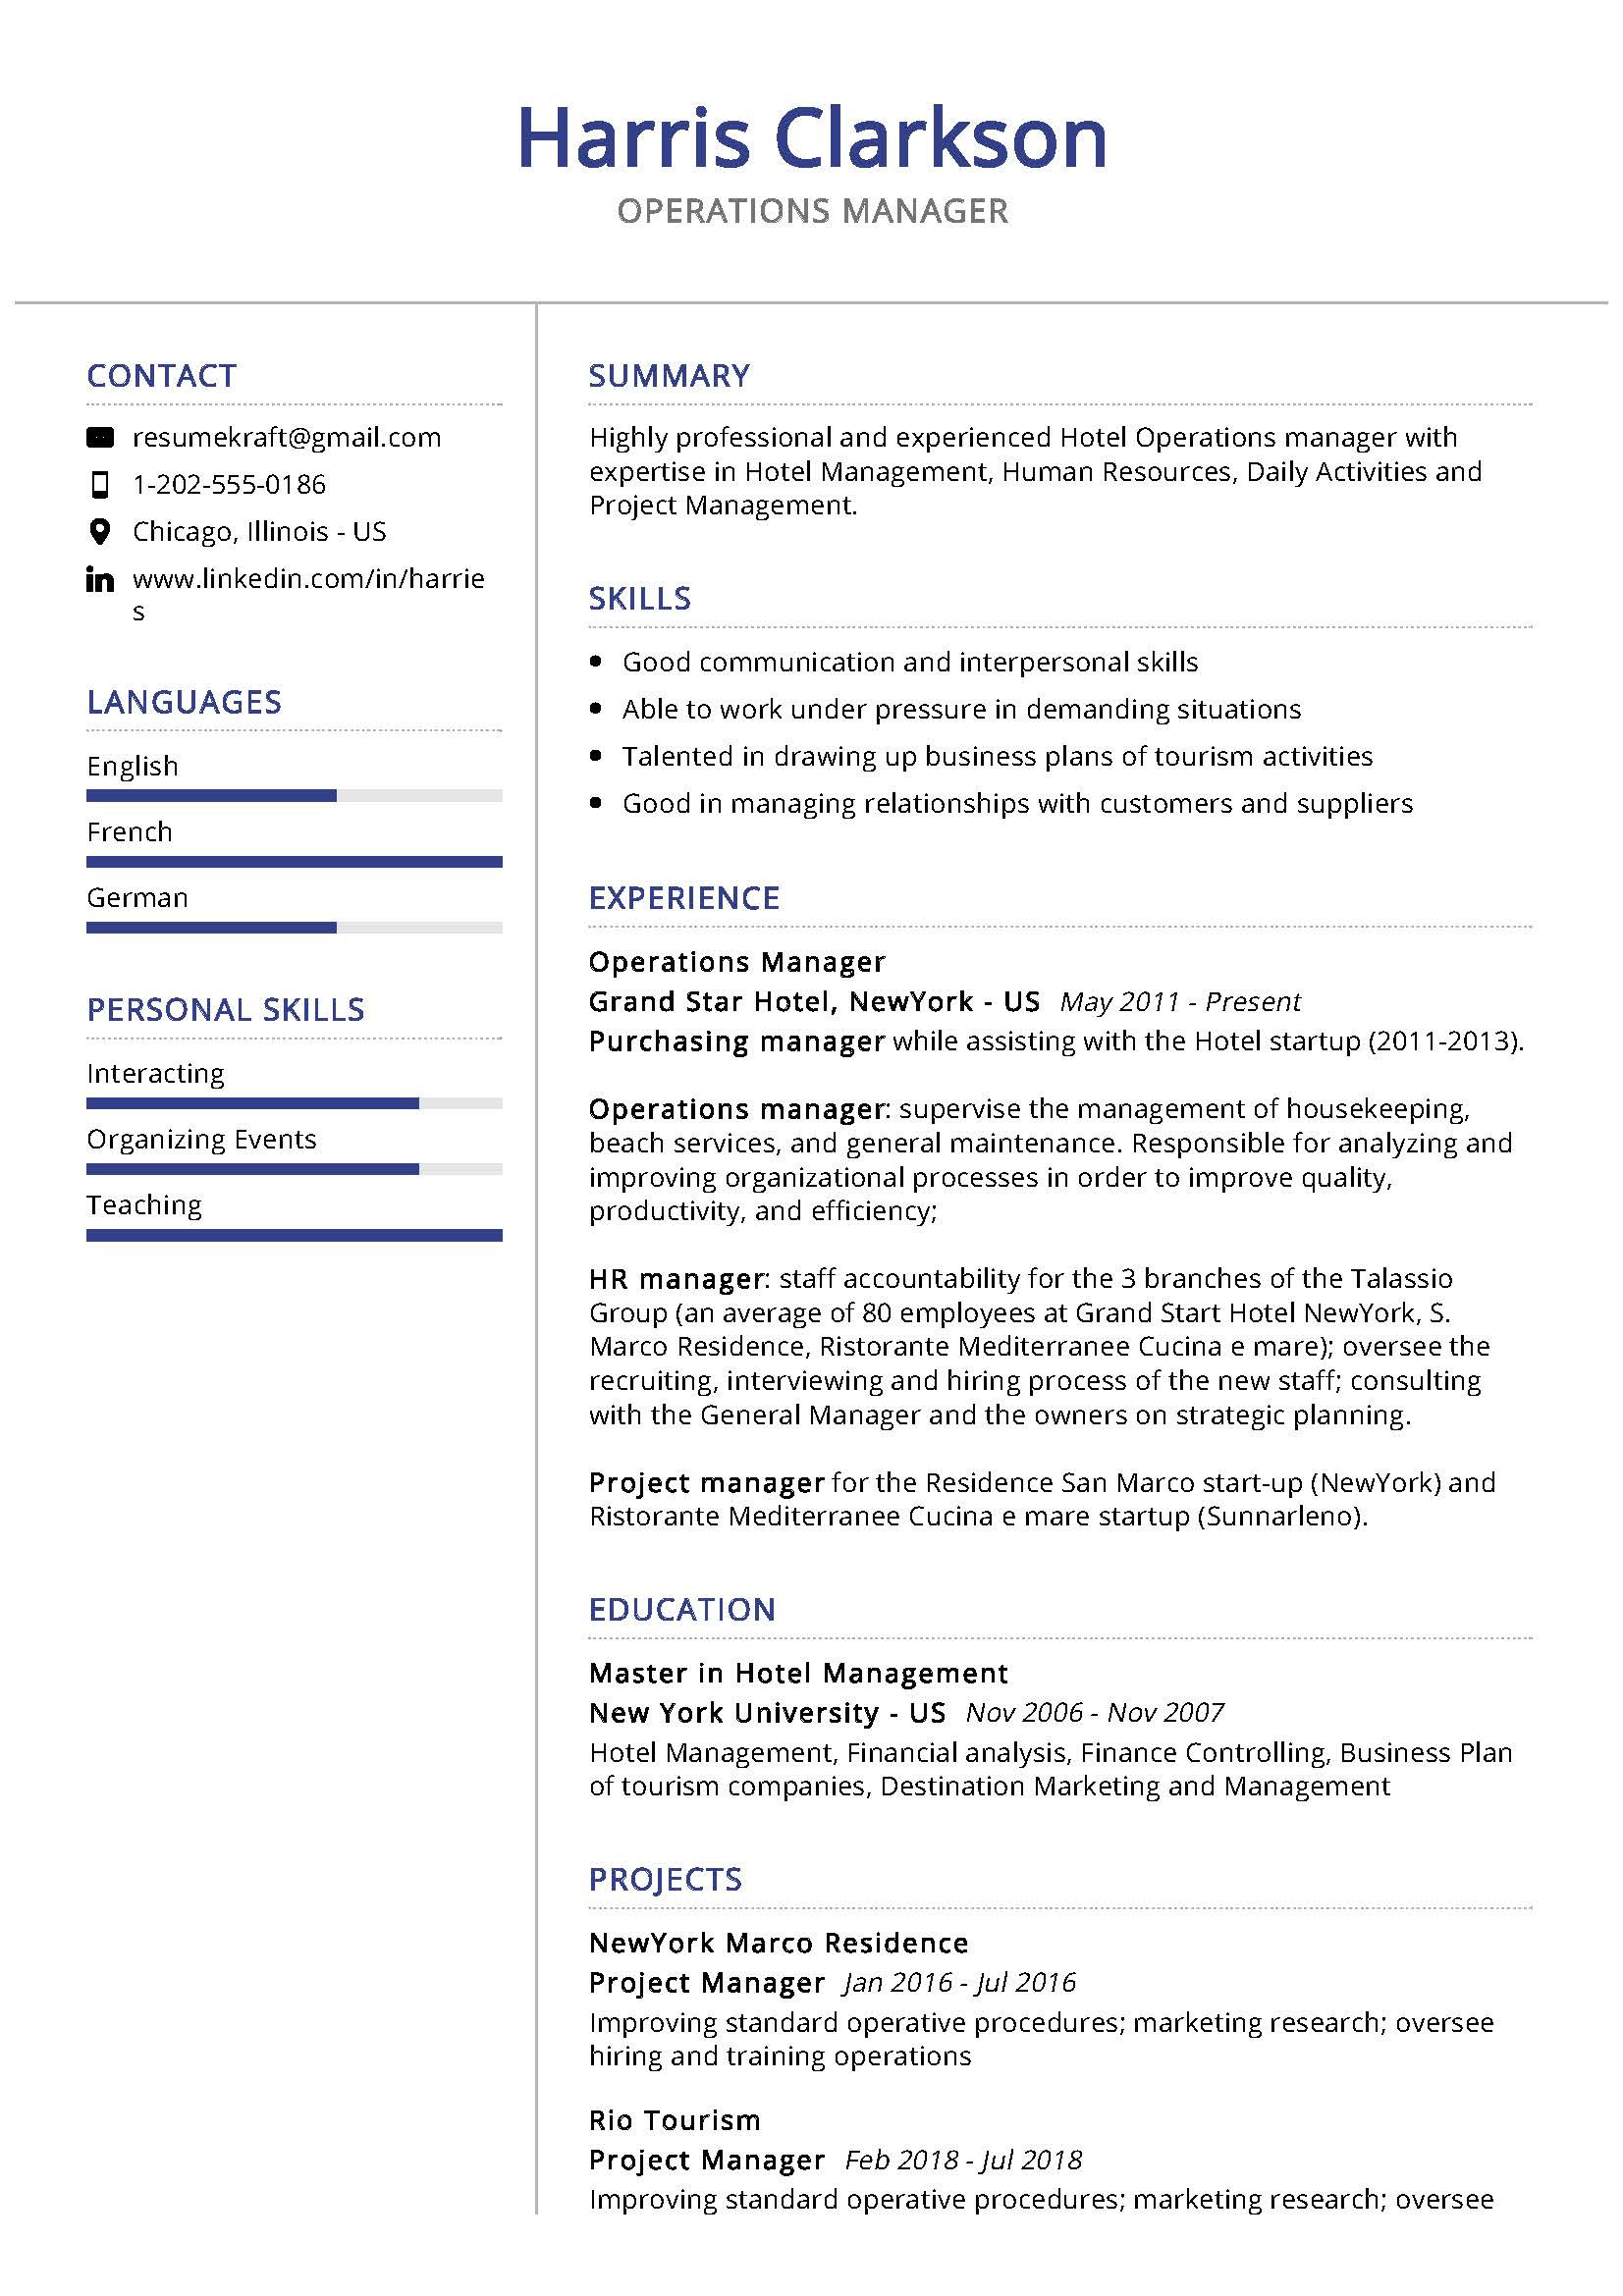 Operations Manager Job Description Resume Sample Operations Manager Resume Sample 2022 Writing Tips – Resumekraft